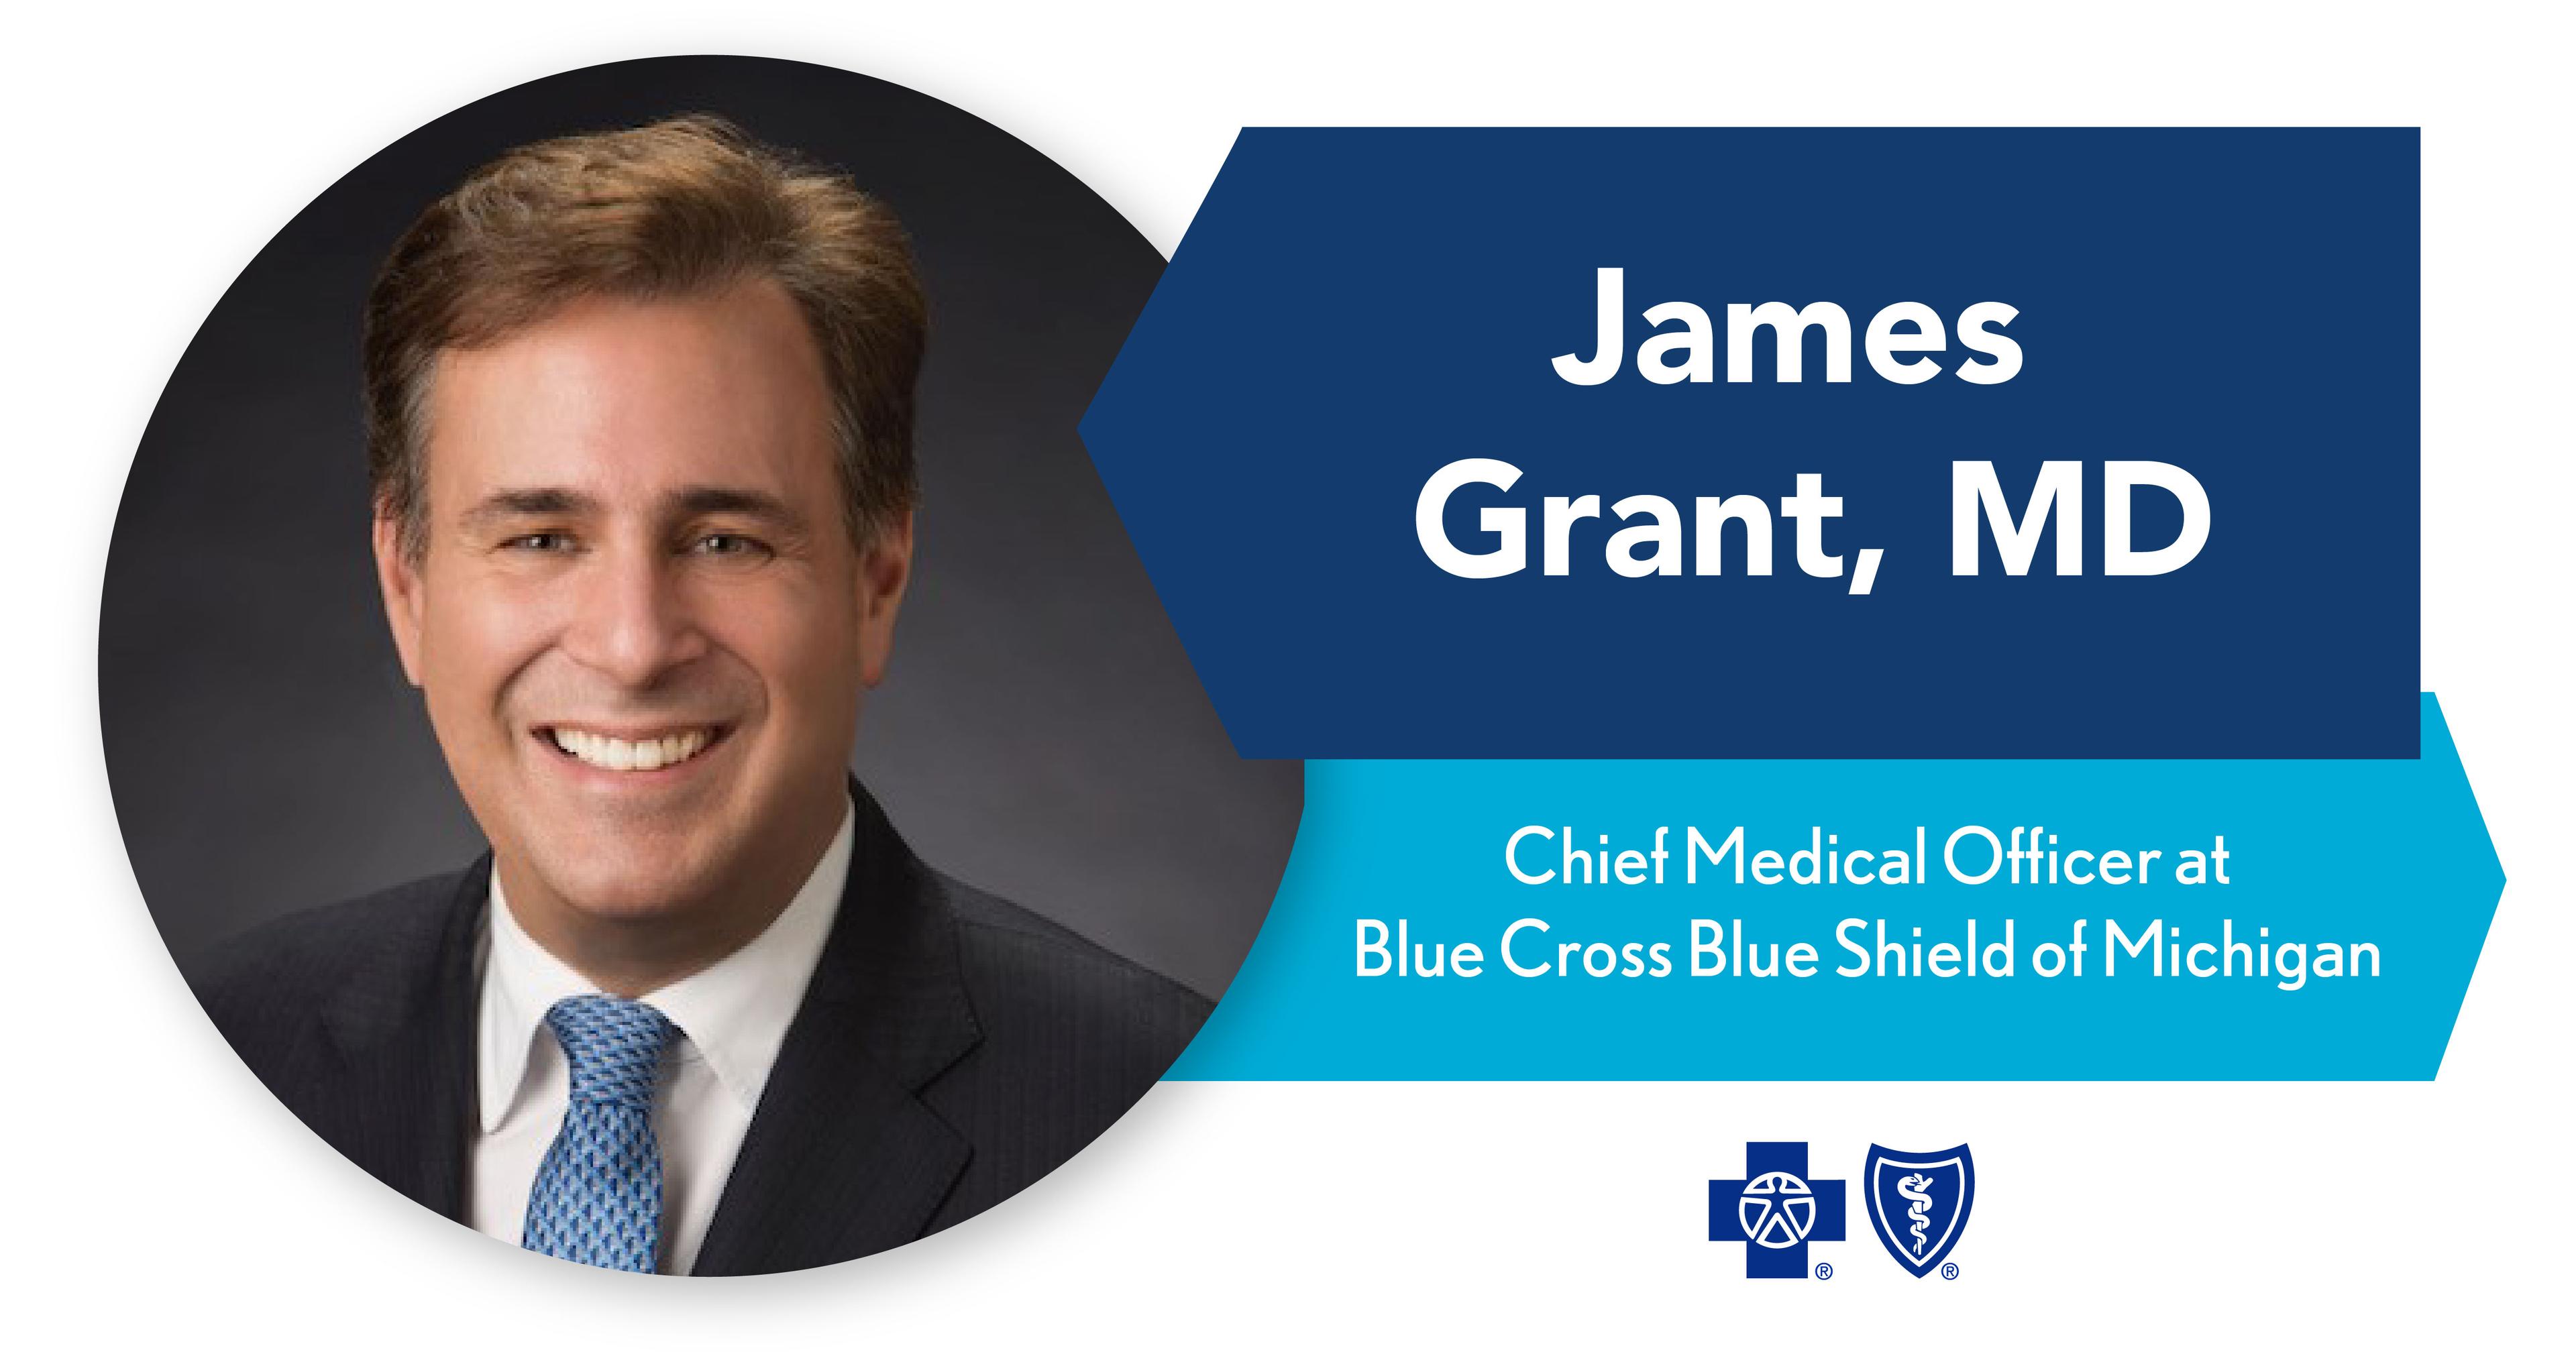 Dr. James Grant